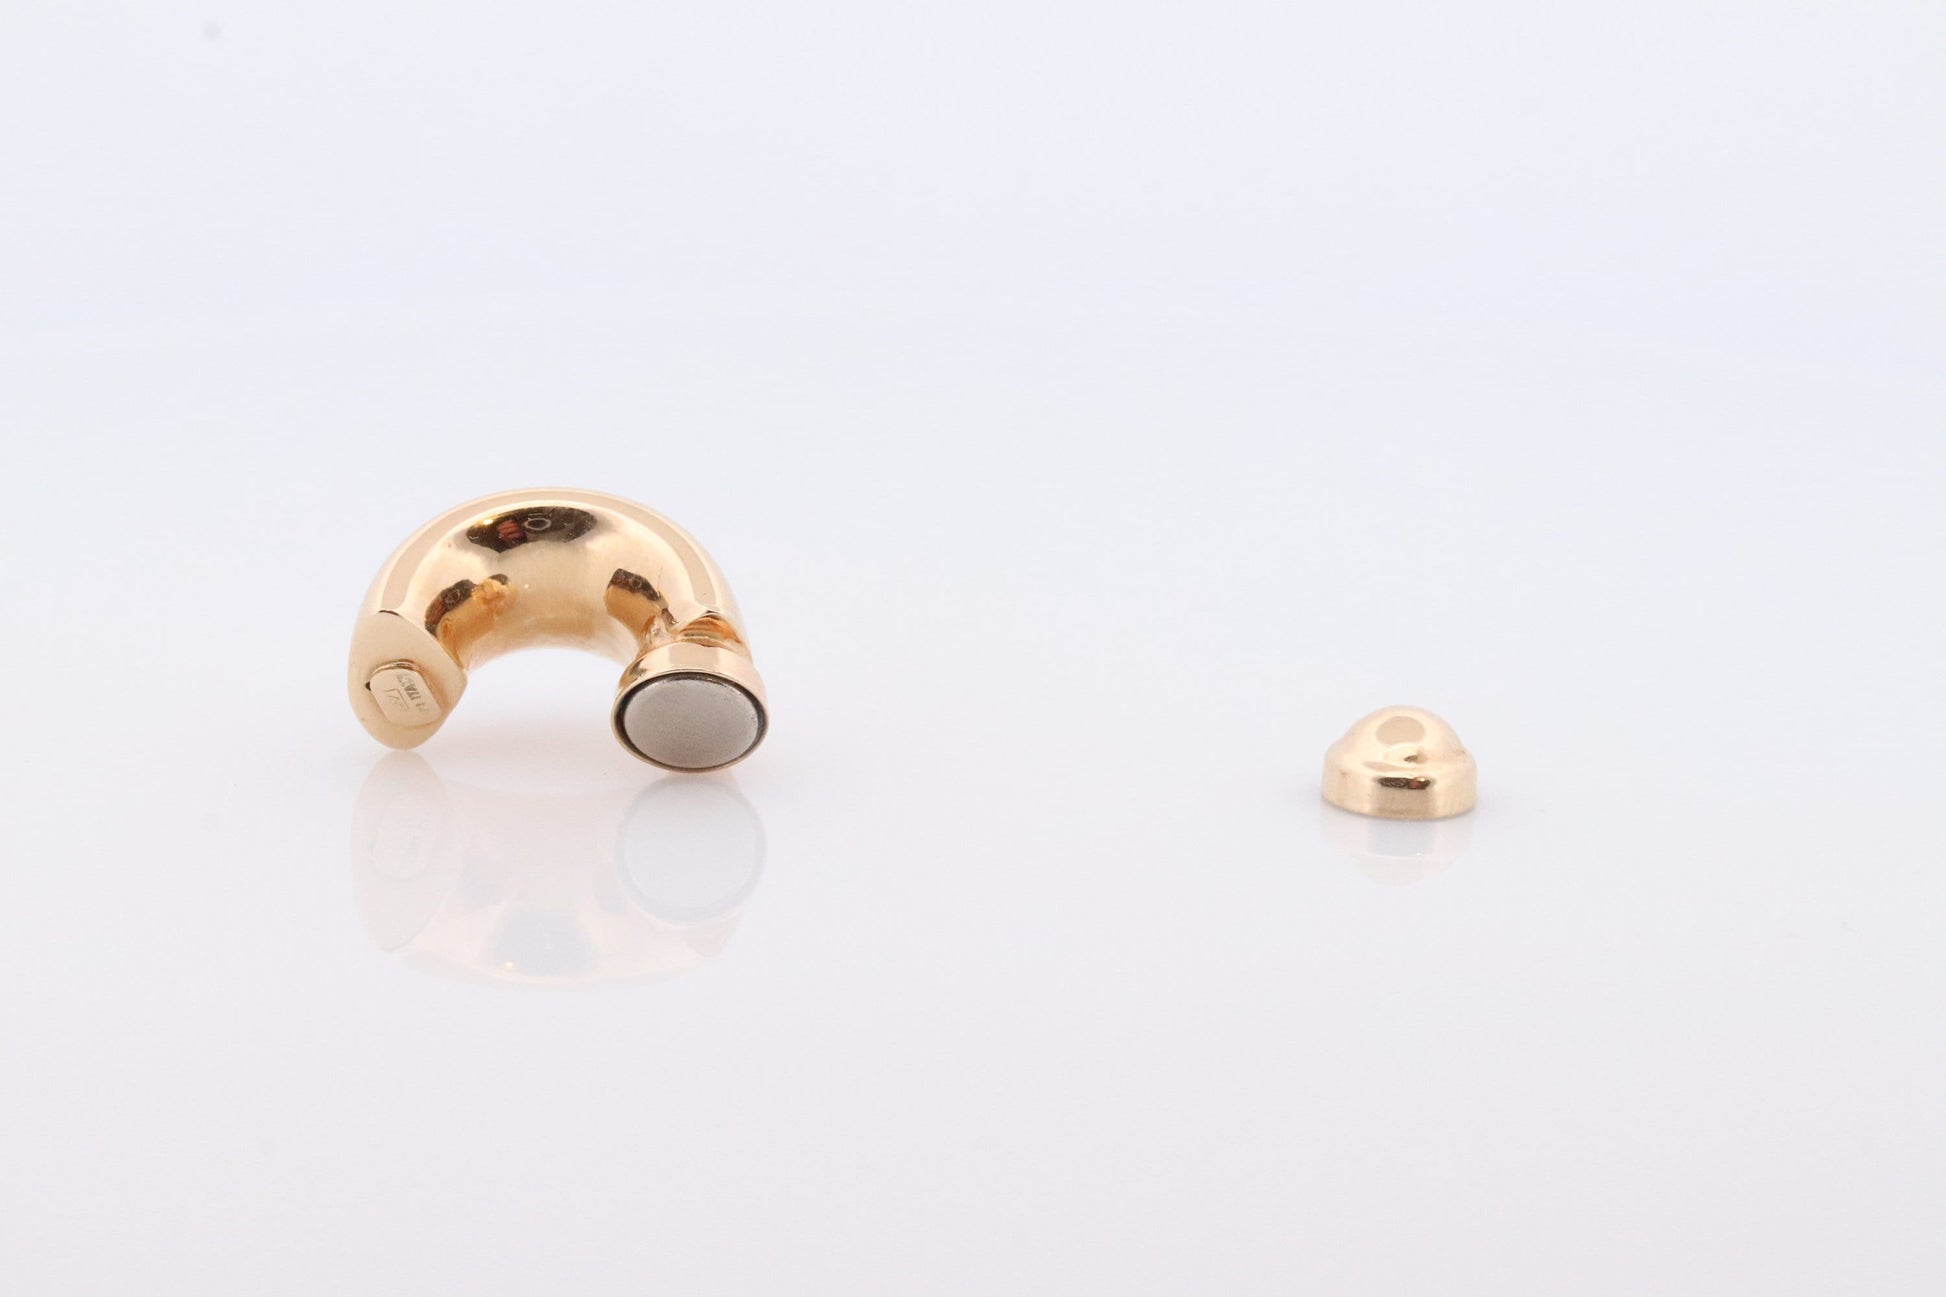 14k Gold Puffed Hollow HOOP Clip On Earrings. Large HOOP earrings Magnetic Hoops for Unpierced Ears. Wide Hoops. st72